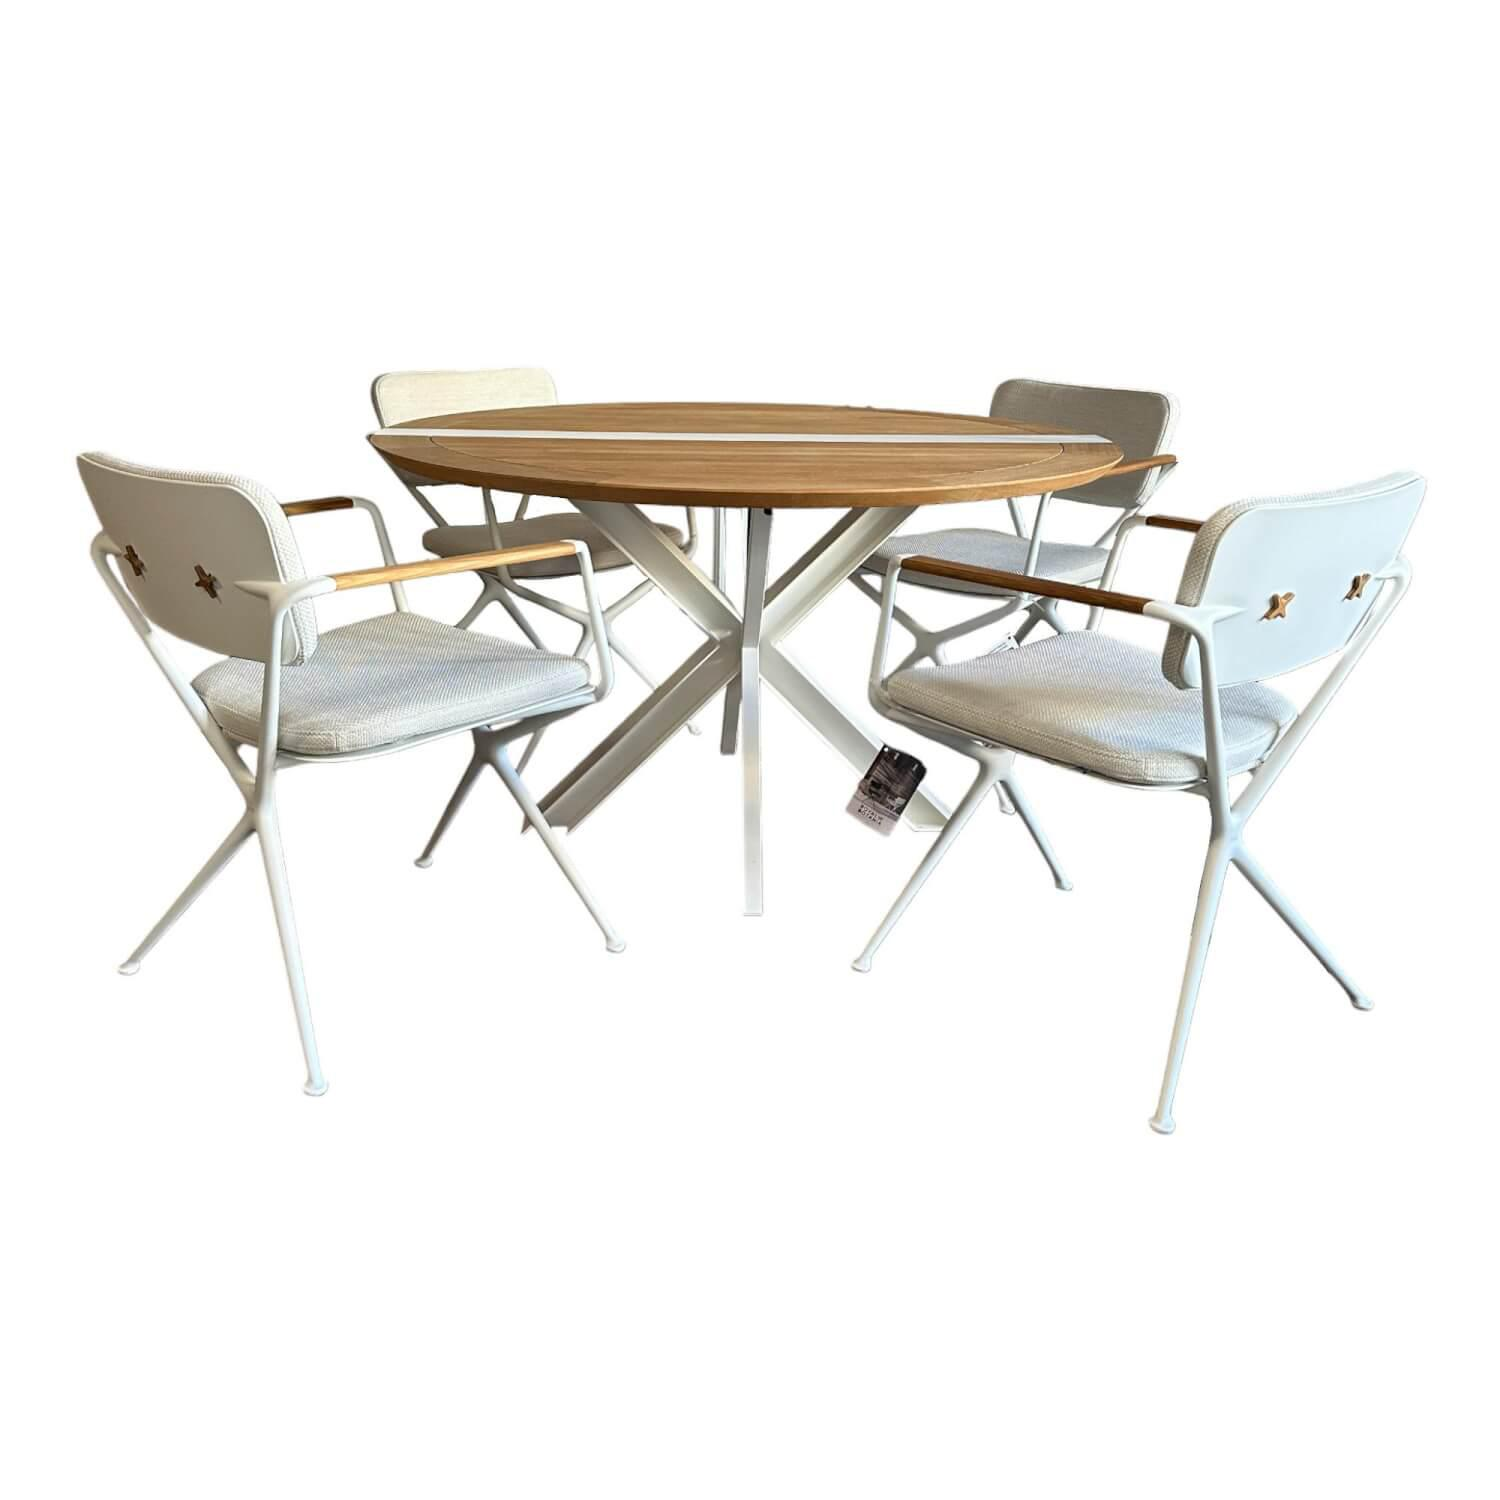 Outdoorgruppe Tisch Traverse Platte Teakholz 4 Stühle Exes Bezug Stoff Creme Ges... von Royal Botania